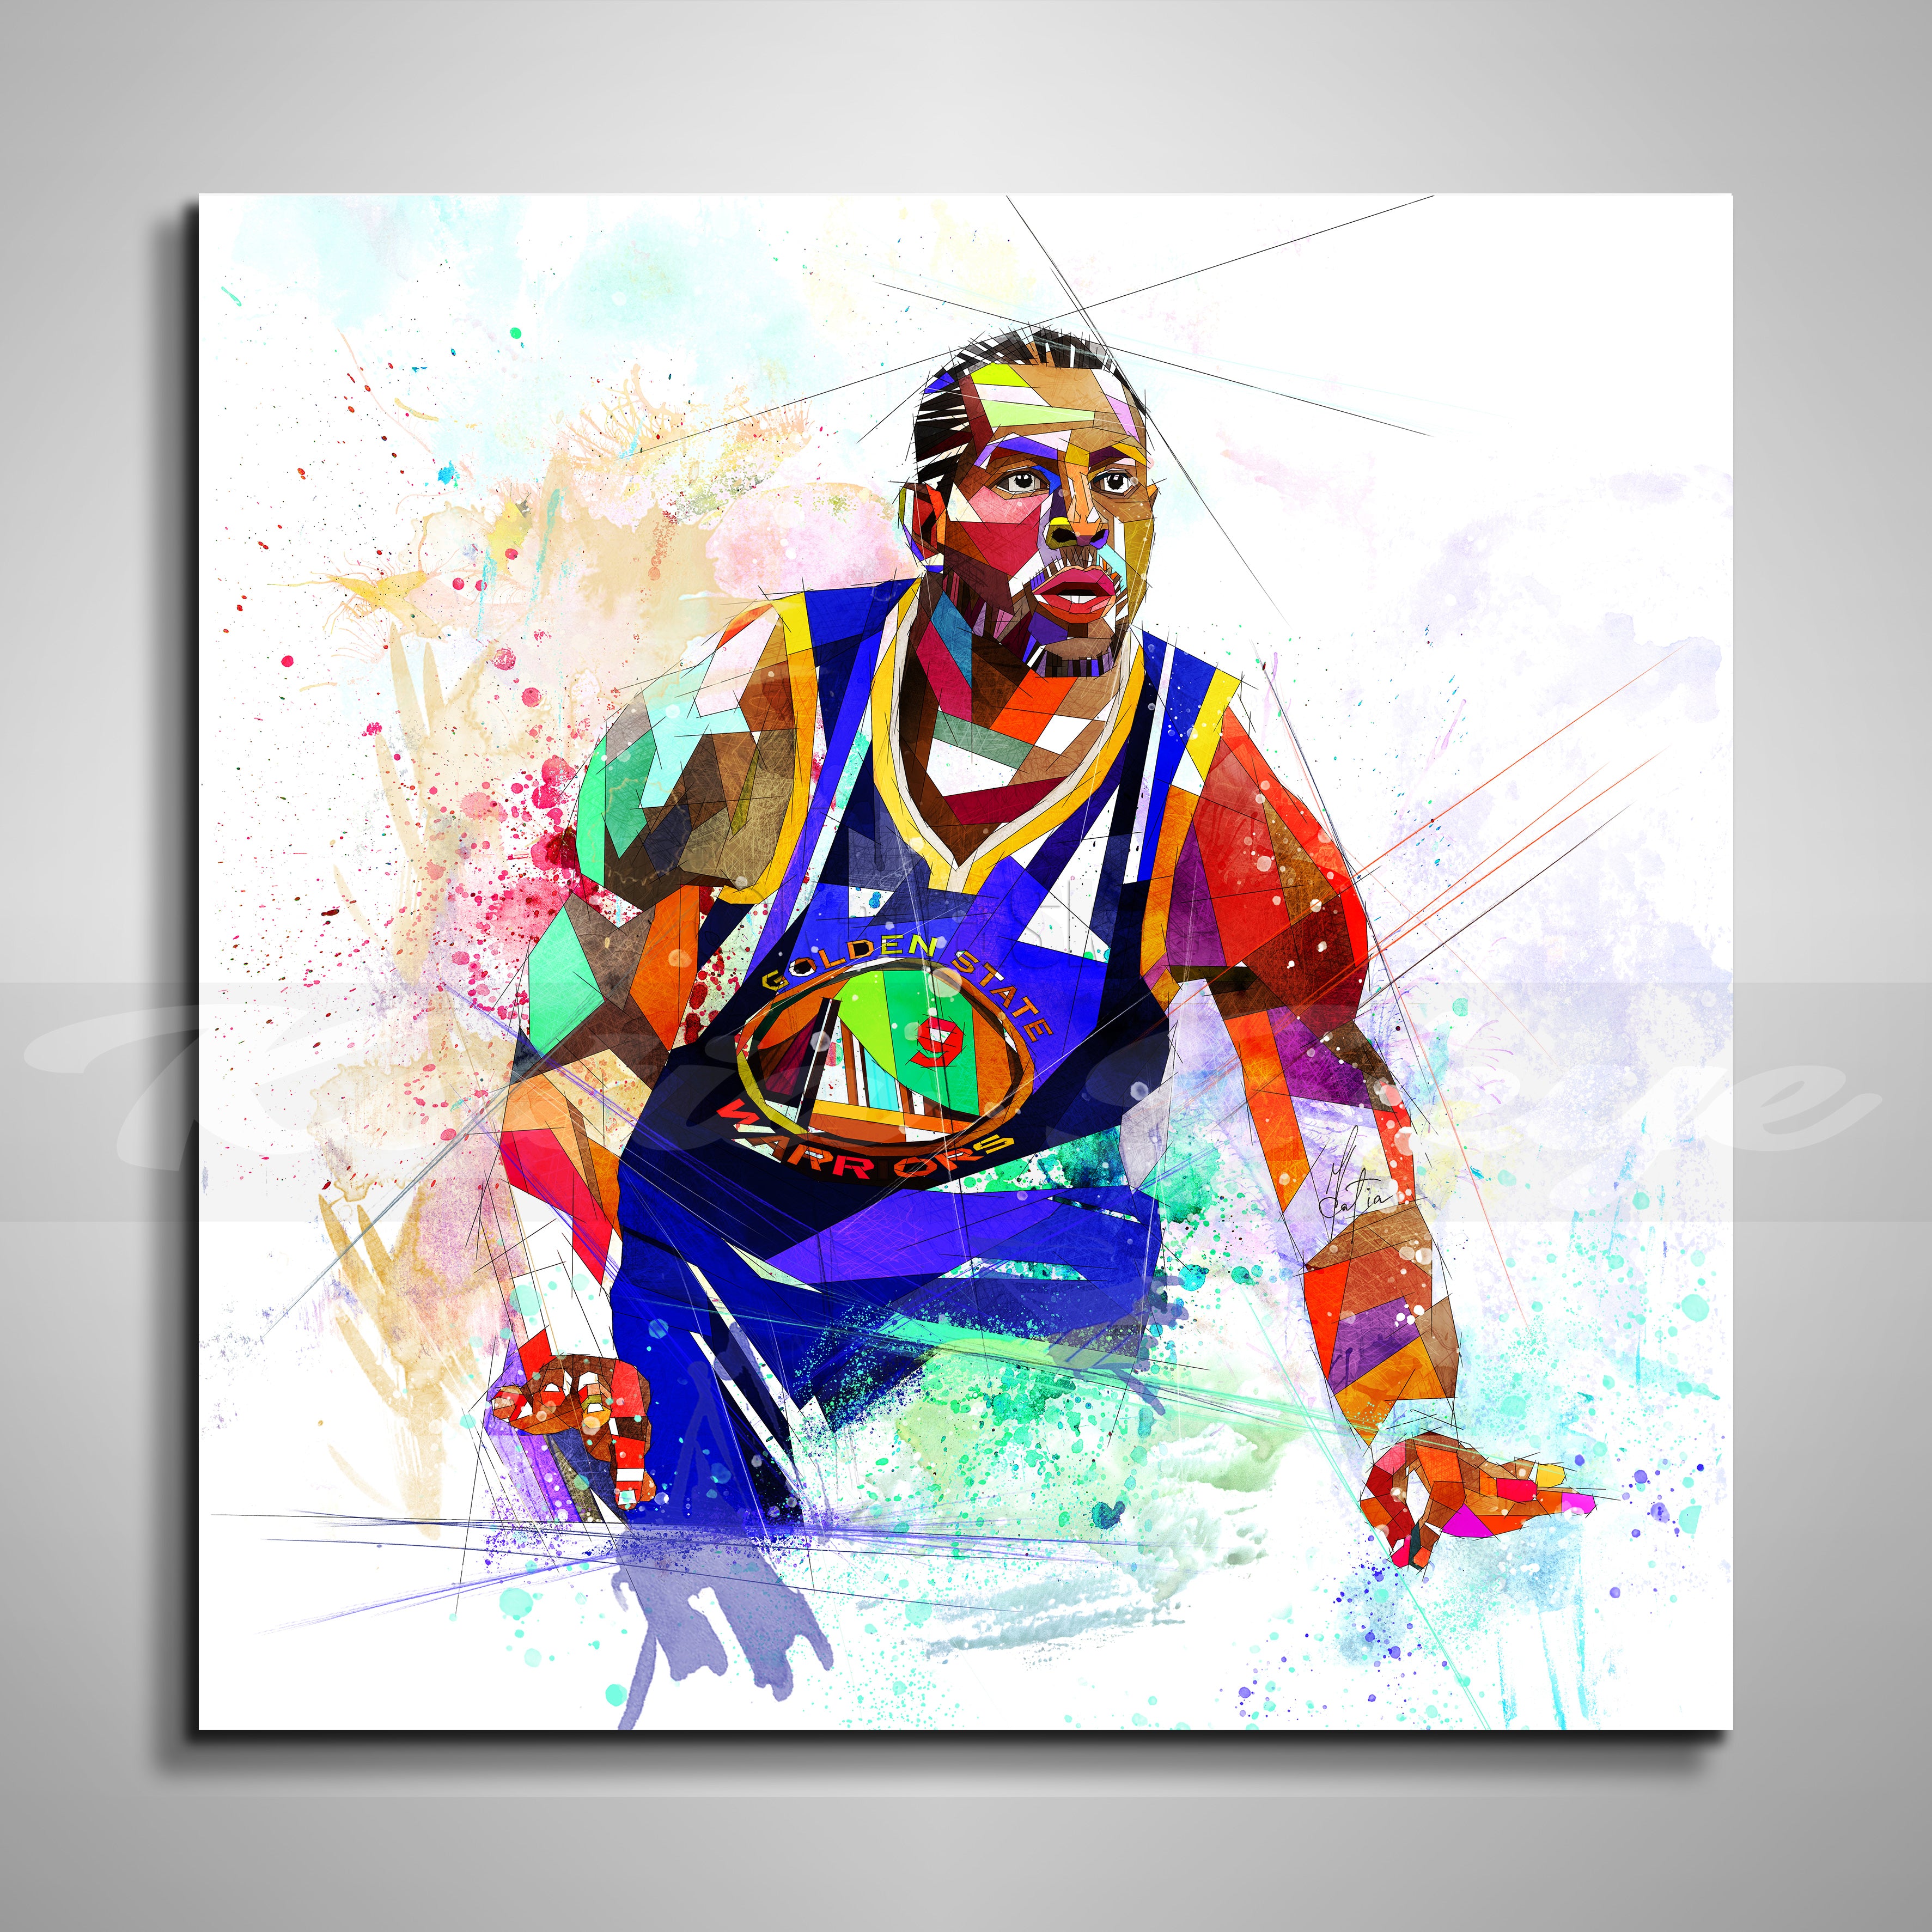 ABSTRACT BASKETBALL WALL ART INSPIRED BY ANDRE IGOUDALA IN ACTION // NBA-AI11